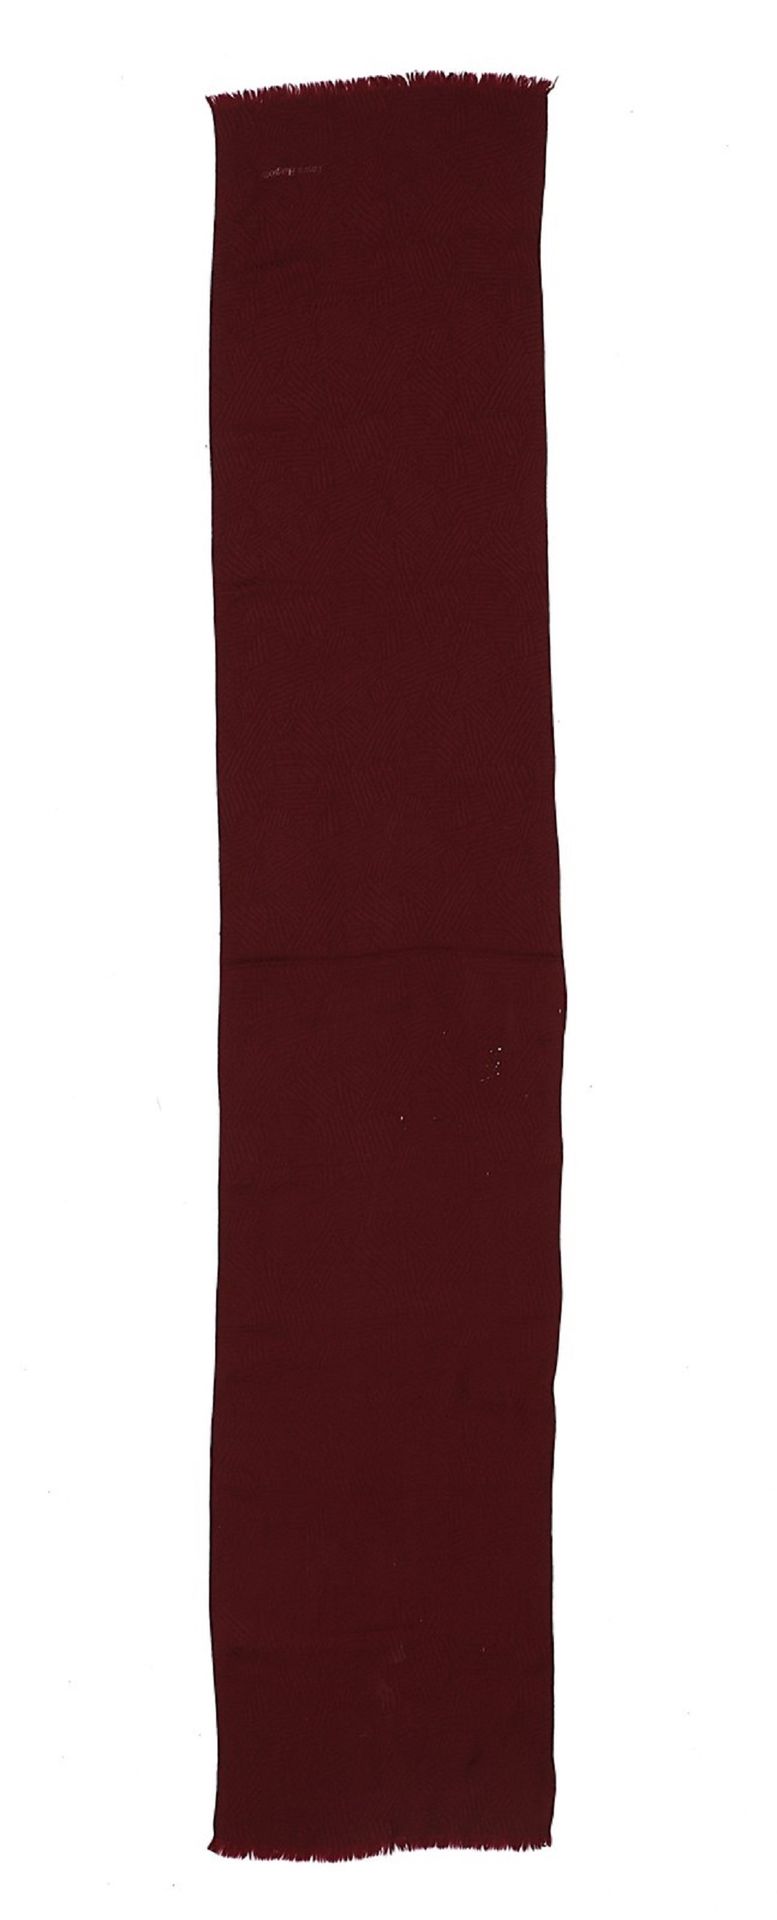 LAURA BIAGIOTTI Bordeaux scarf. 波尔多式围巾。丝质。厘米150,00 x 30,00。小缺陷。